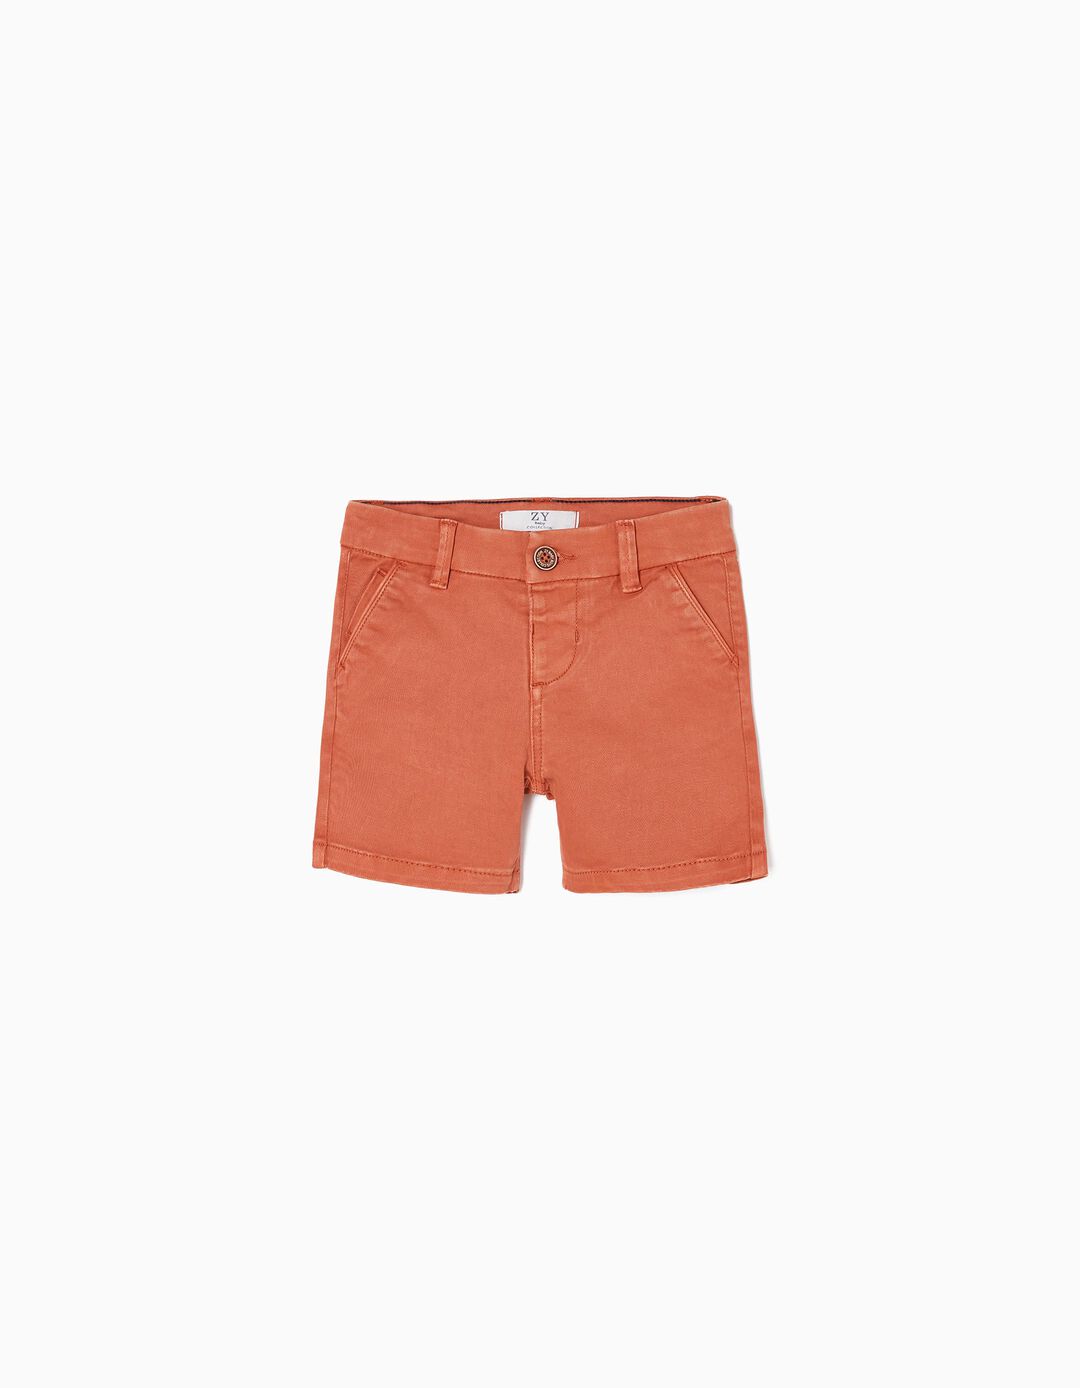 Twill Shorts for Baby Boys, Orange